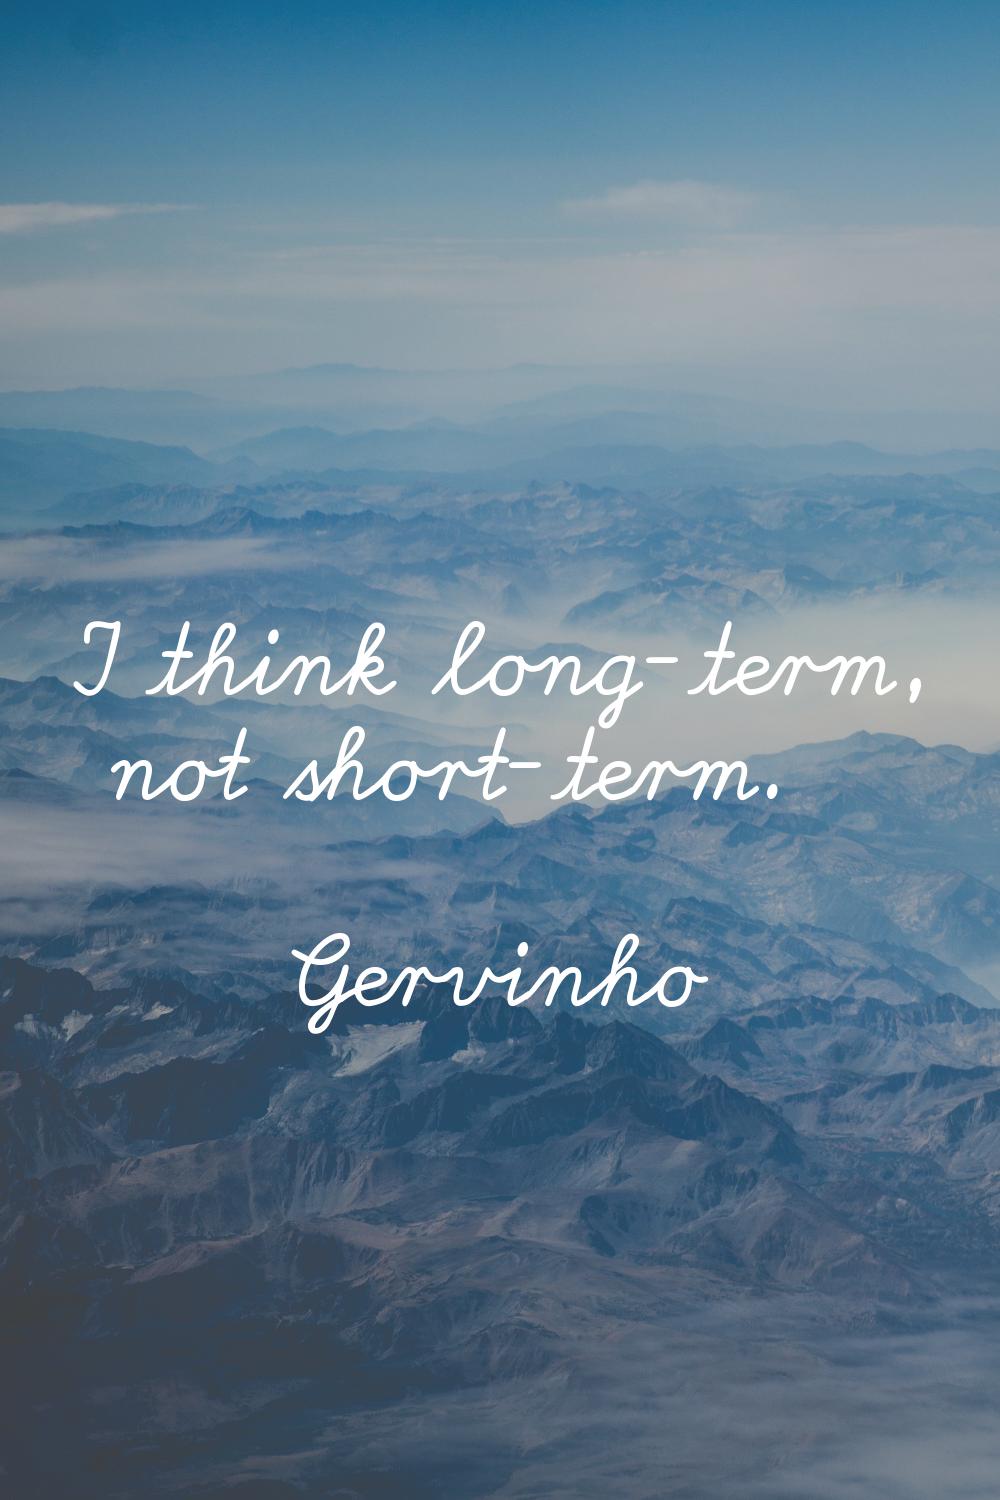 I think long-term, not short-term.